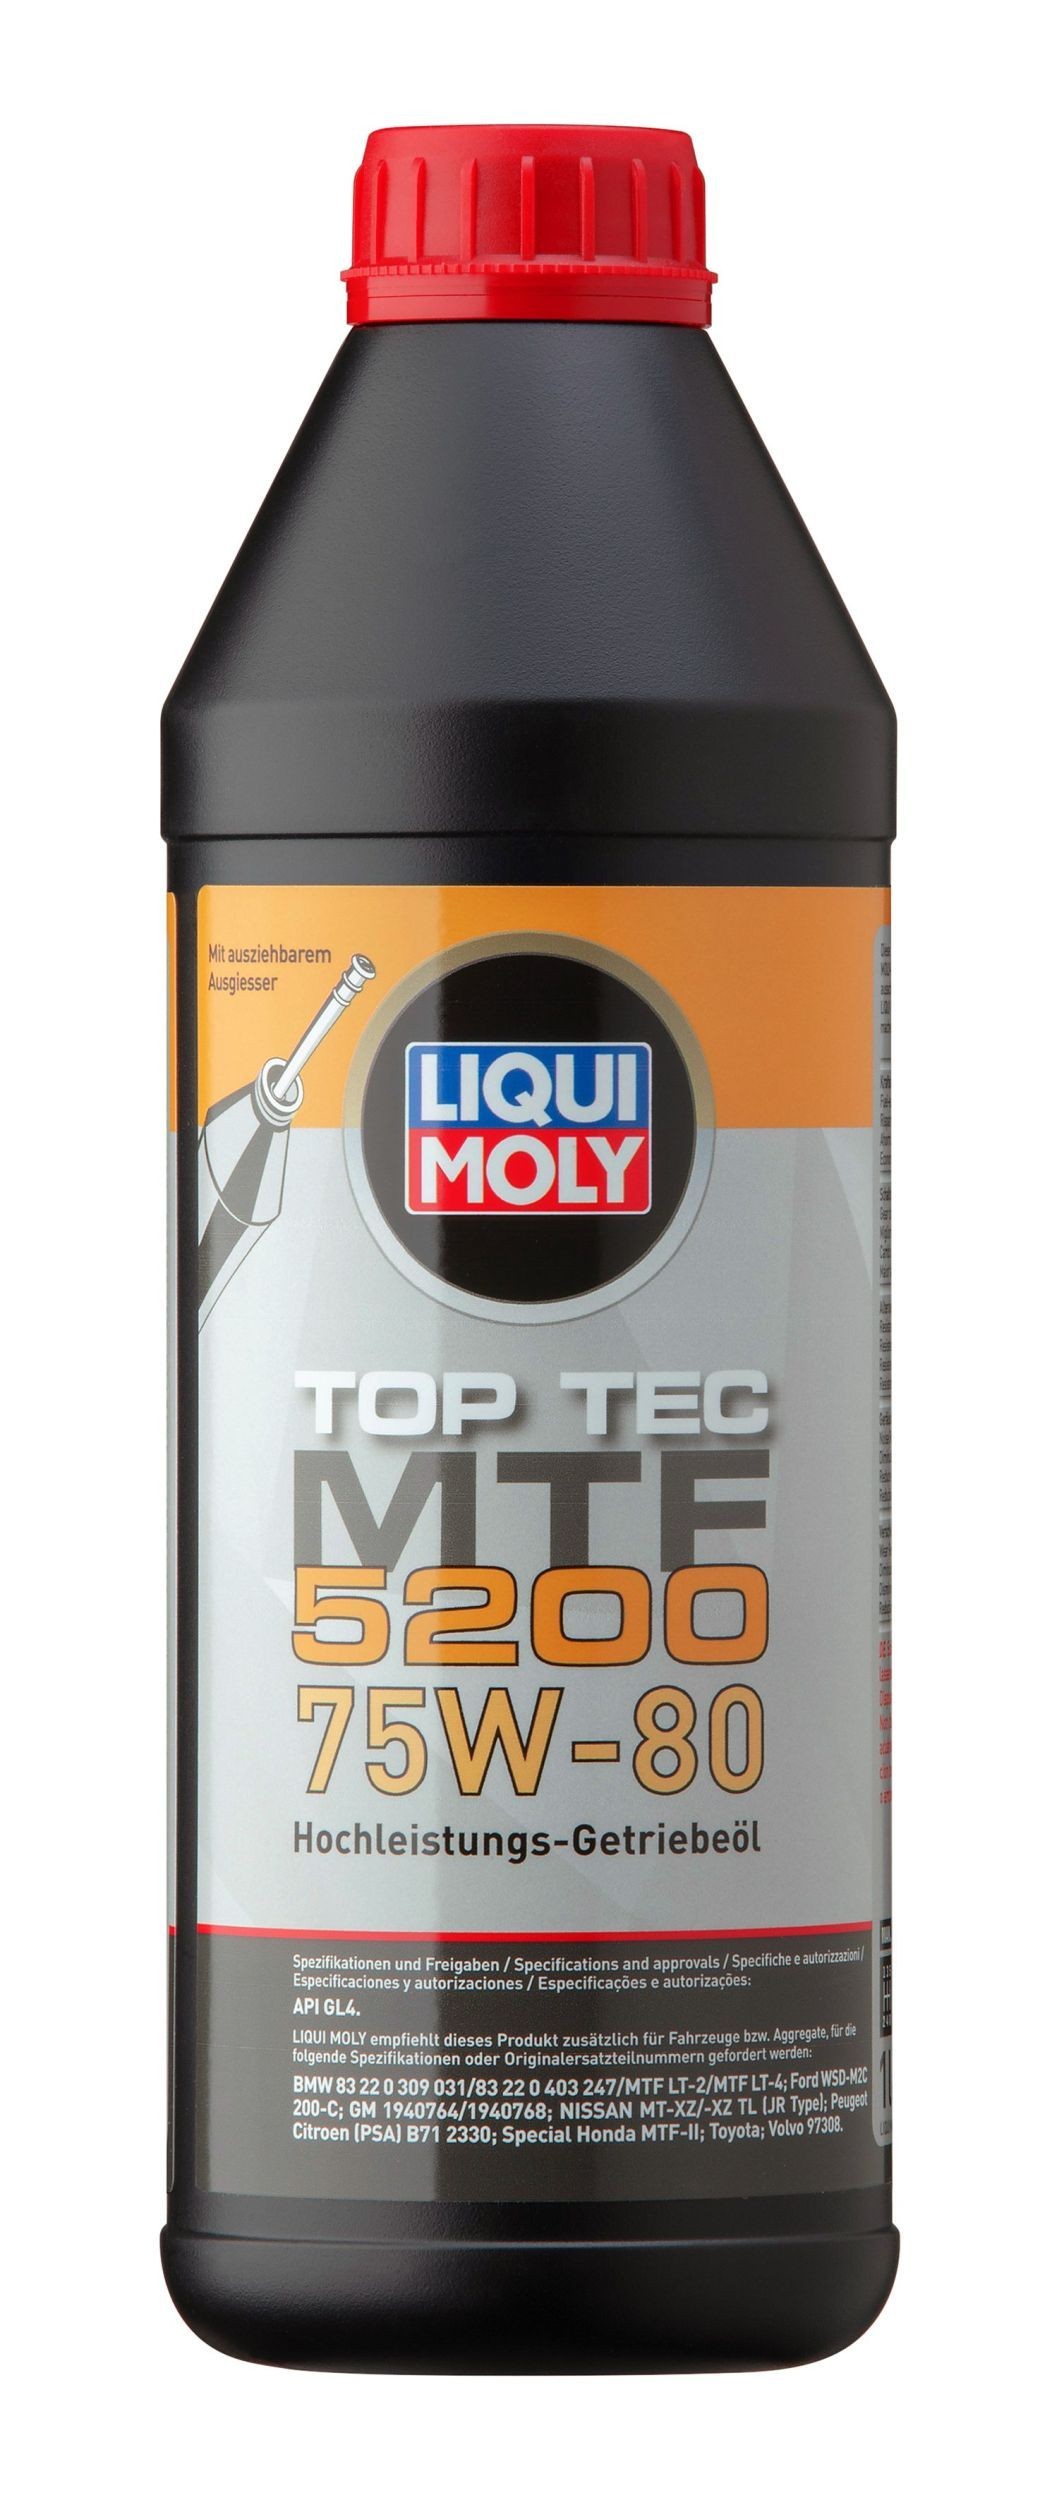 LIQUI MOLY Top Tec, MTF 5200 20845 YObykes Getriebeöl Motorrad zum günstigen Preis